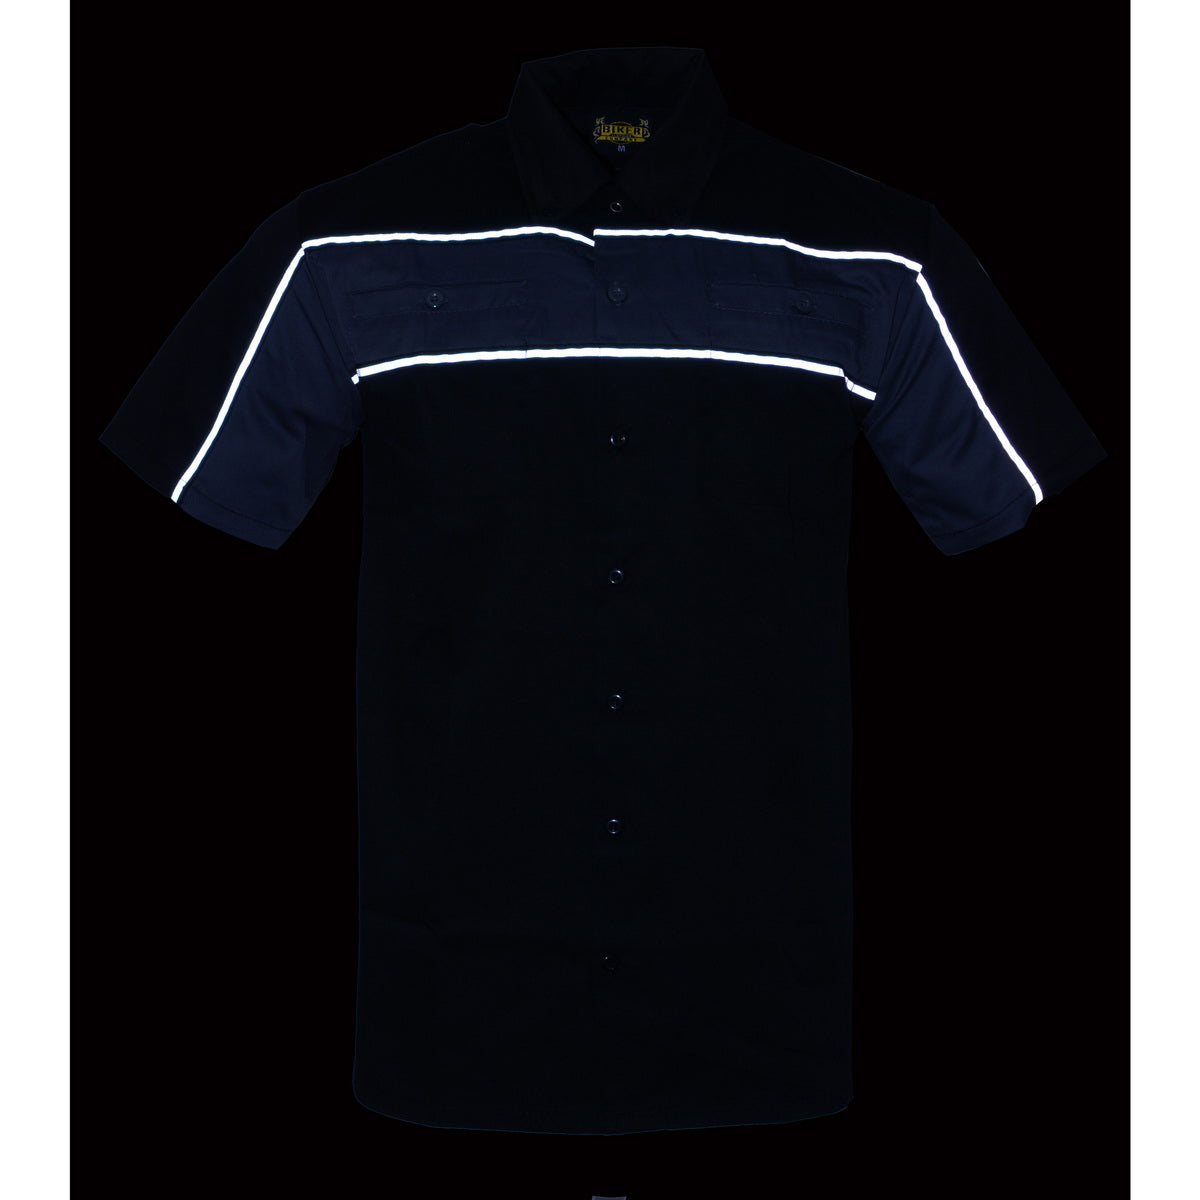 Milwaukee Leather MDM11672.01 Men's Black and Grey Button Up Heavy-Duty Work Shirt | Classic Mechanic Work Shirt